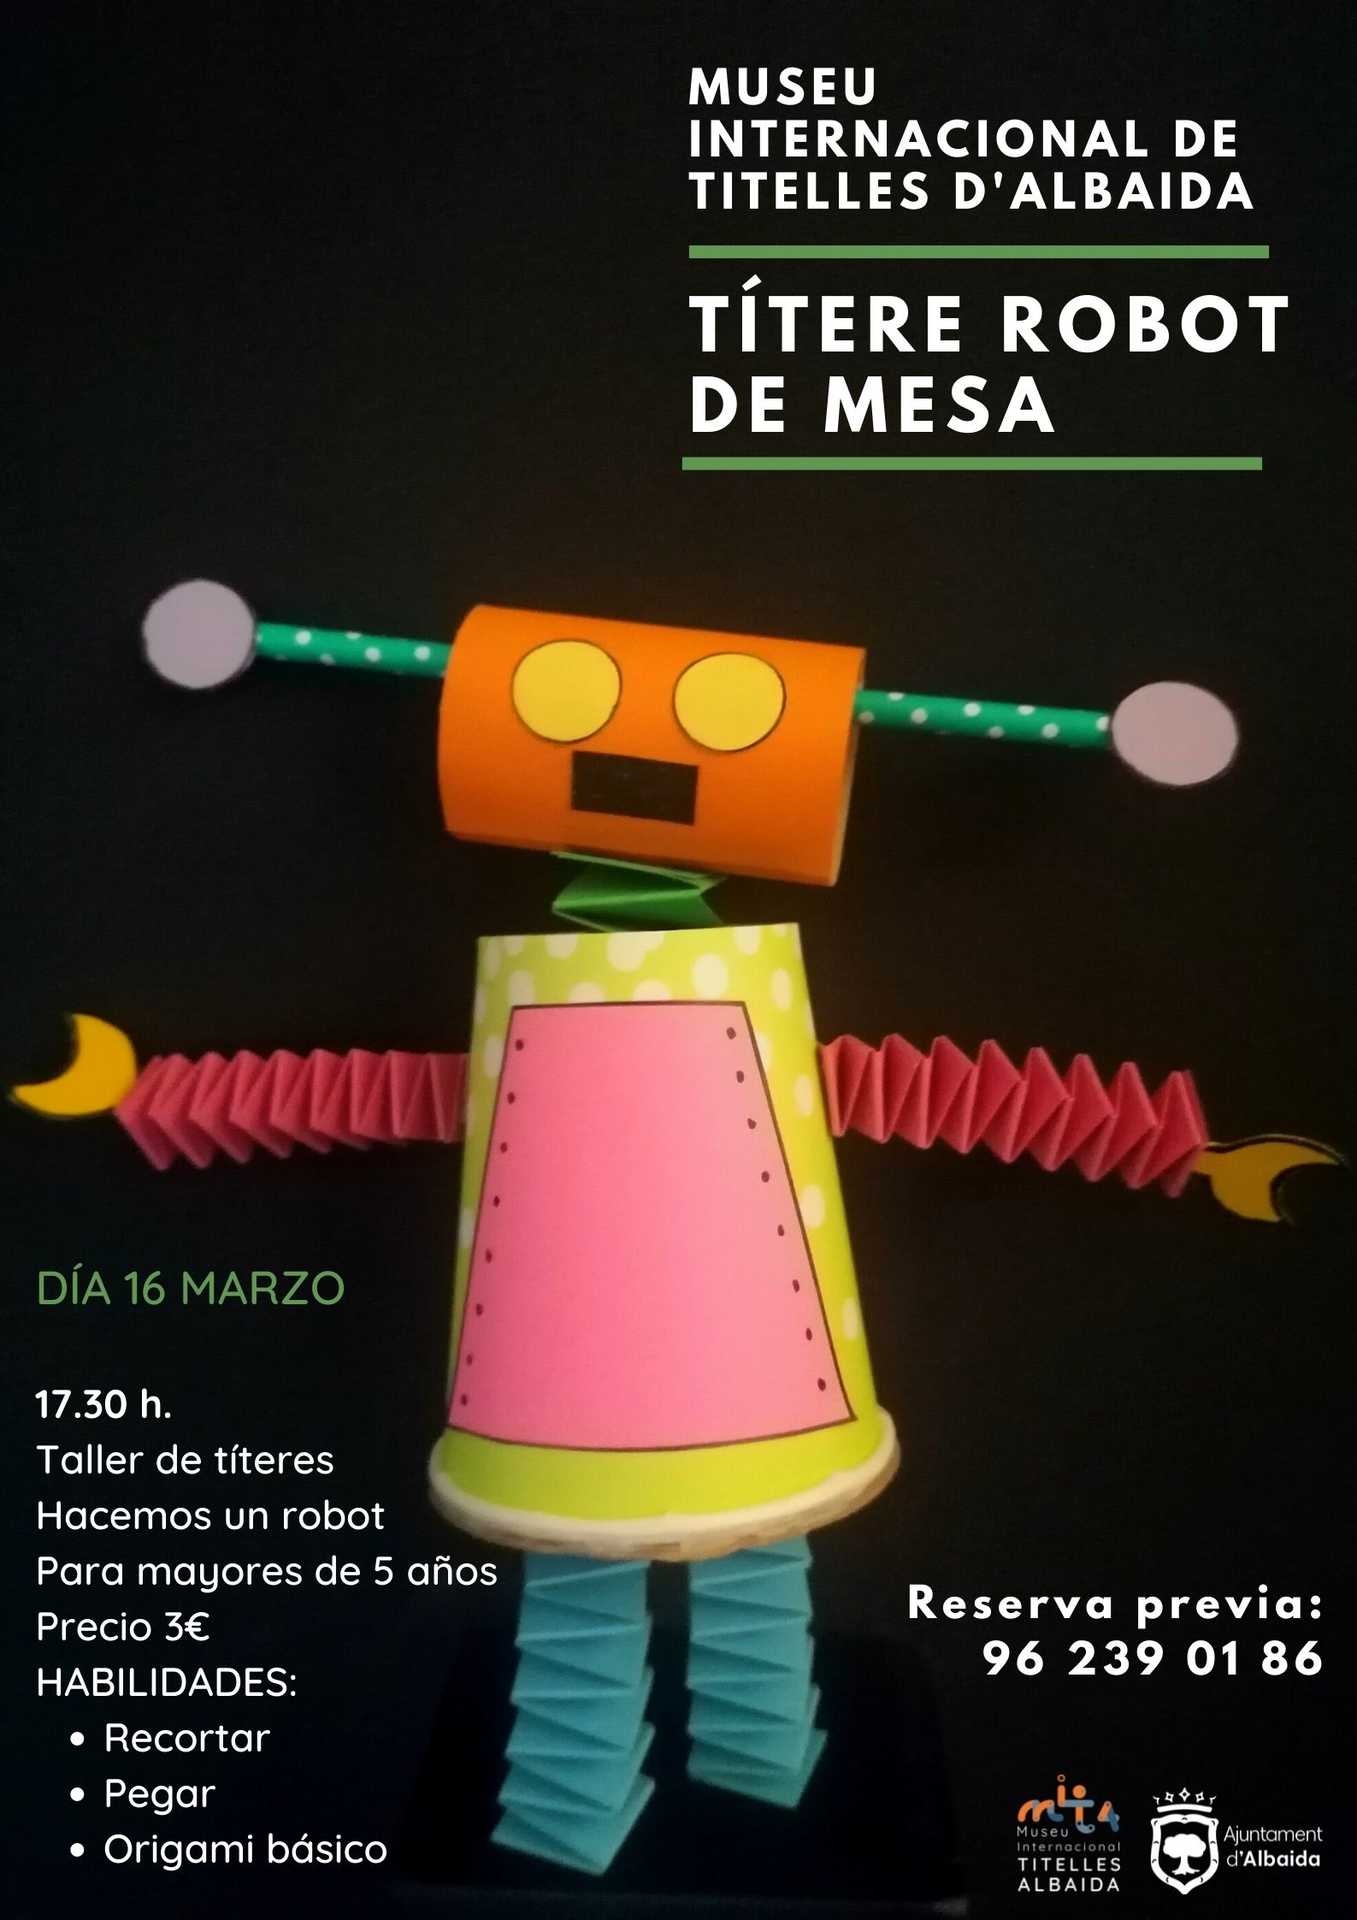 TALLER DE TÍTERE ROBOT DE MESA